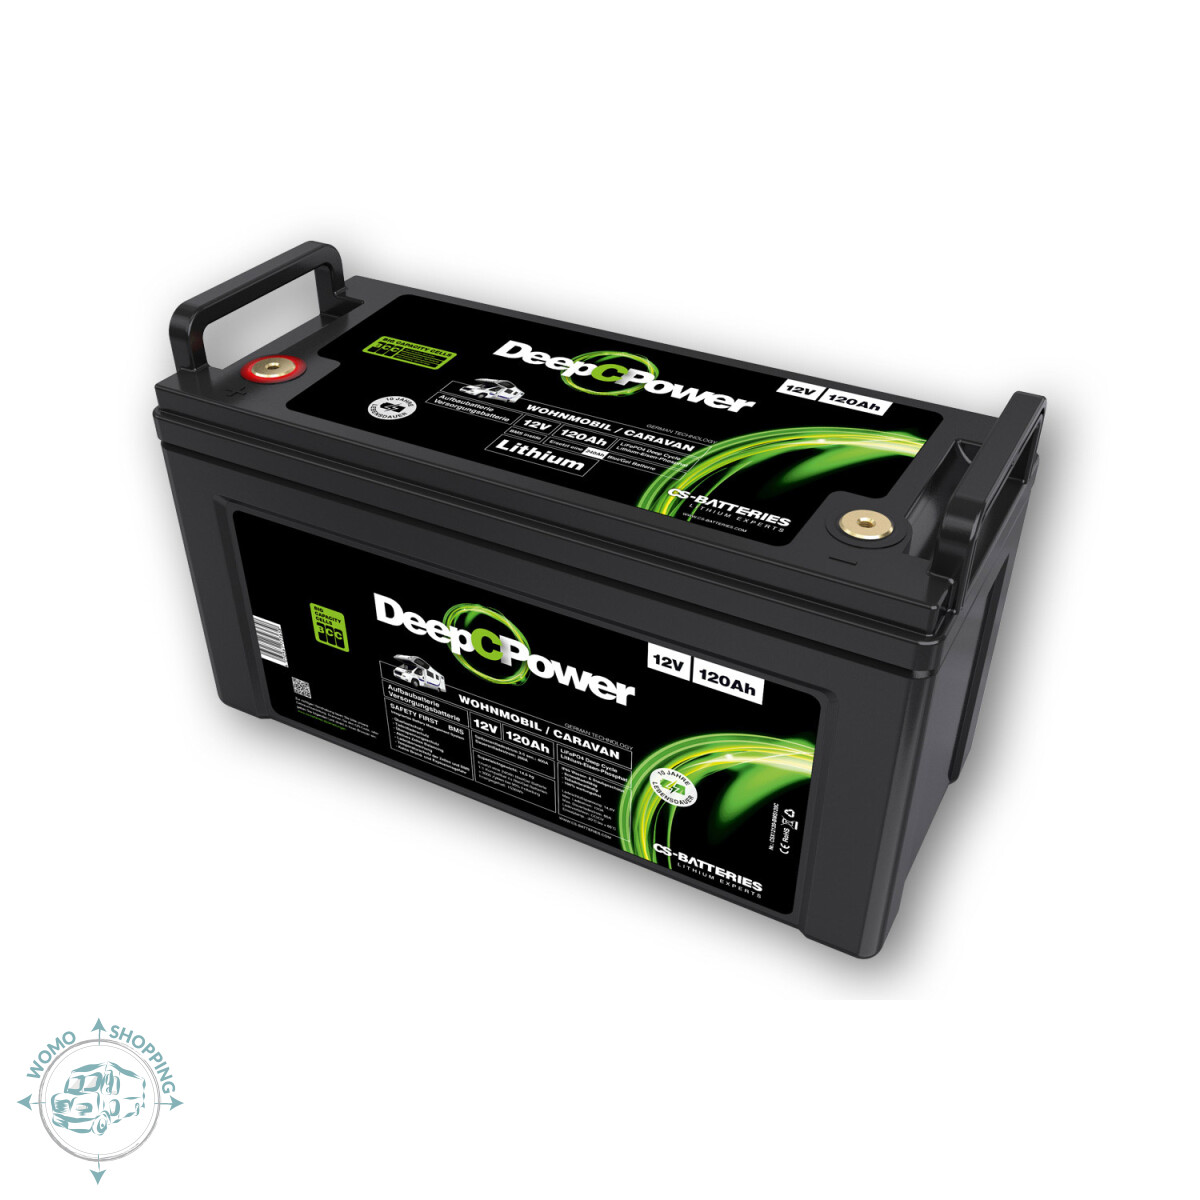 120AH Lithium Batterie von CS - unser Vanlife-Allrounder, 839,00 €